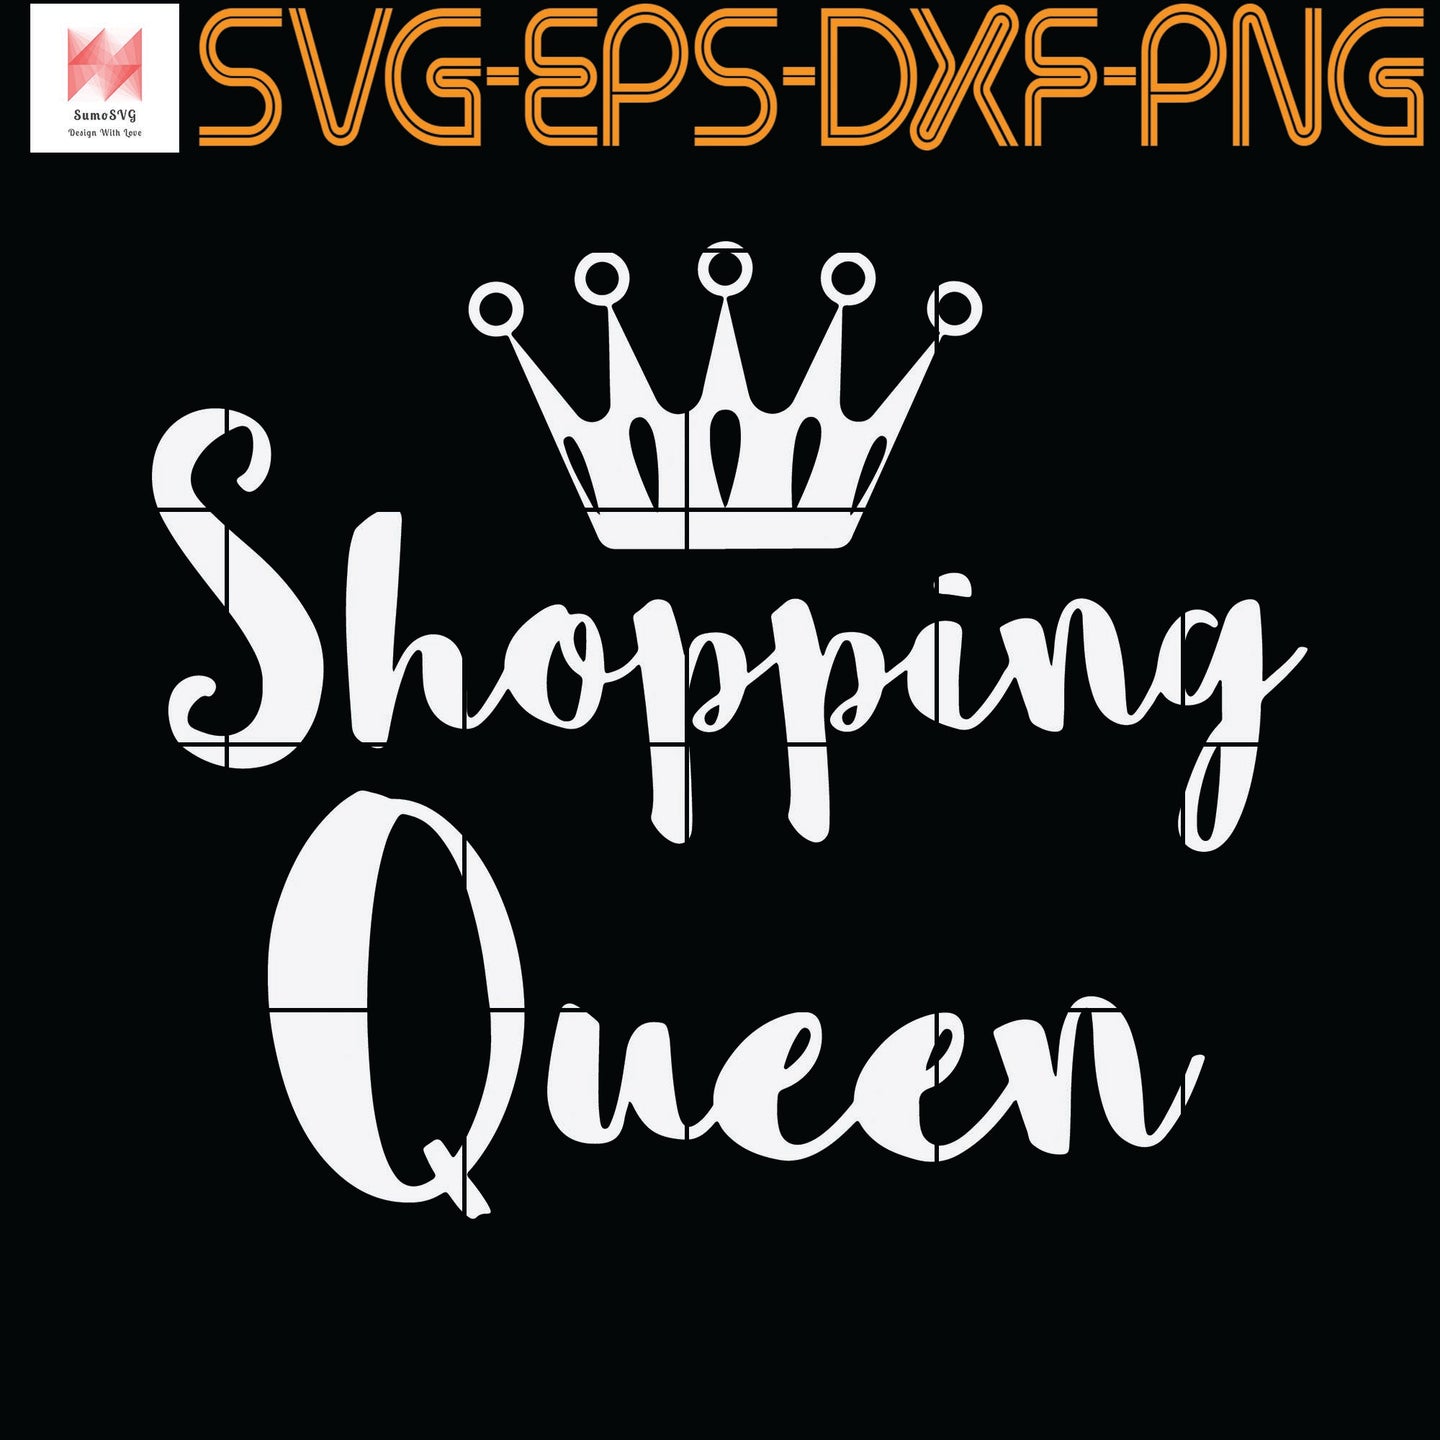 Women S Shopping Queen Shopping Shopping Queen Quotes Funny Quotes Sumosvg